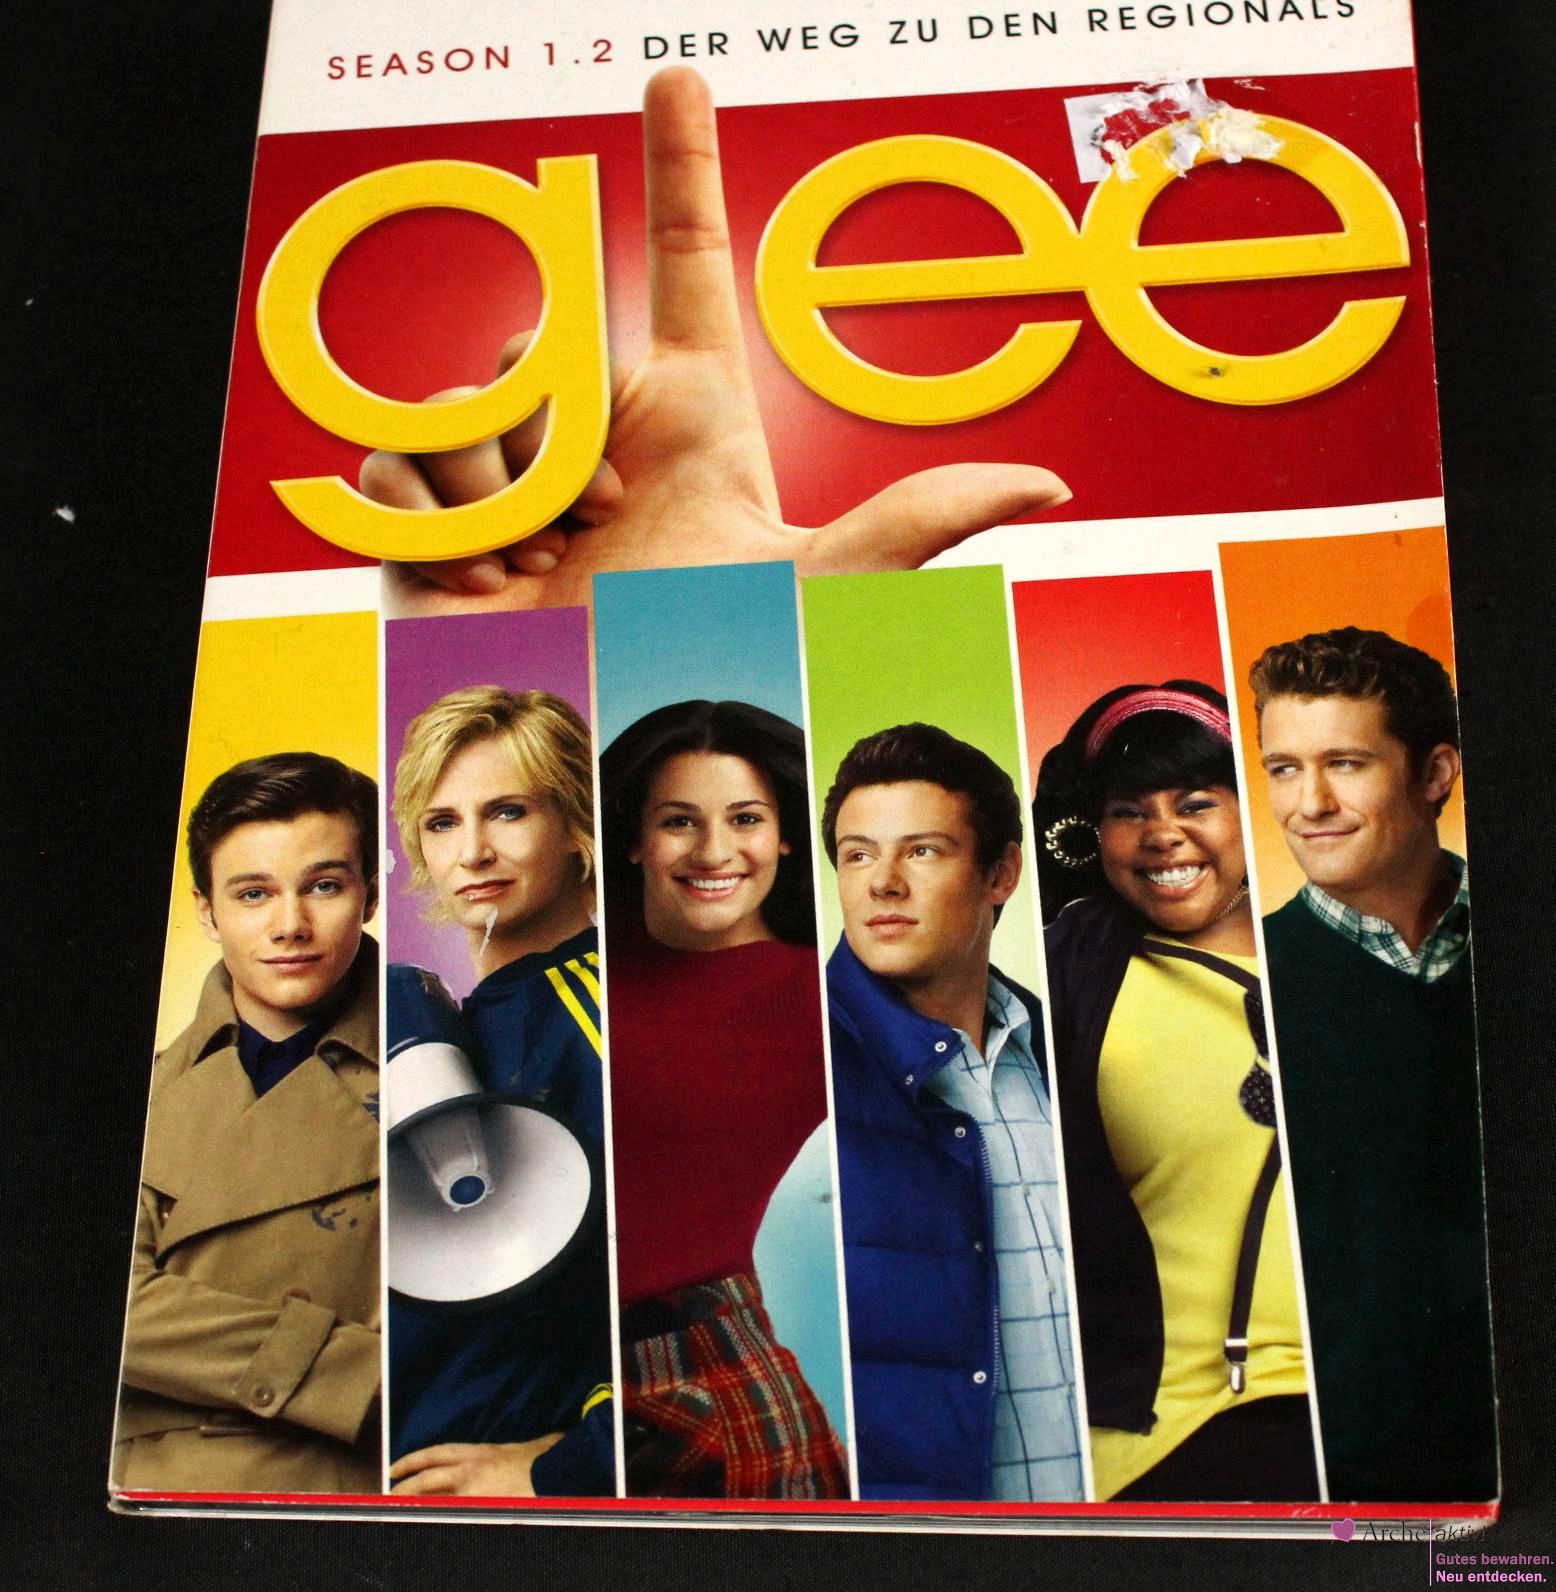 Glee - Season 1.2, 3 DVDs (komplett), gebraucht